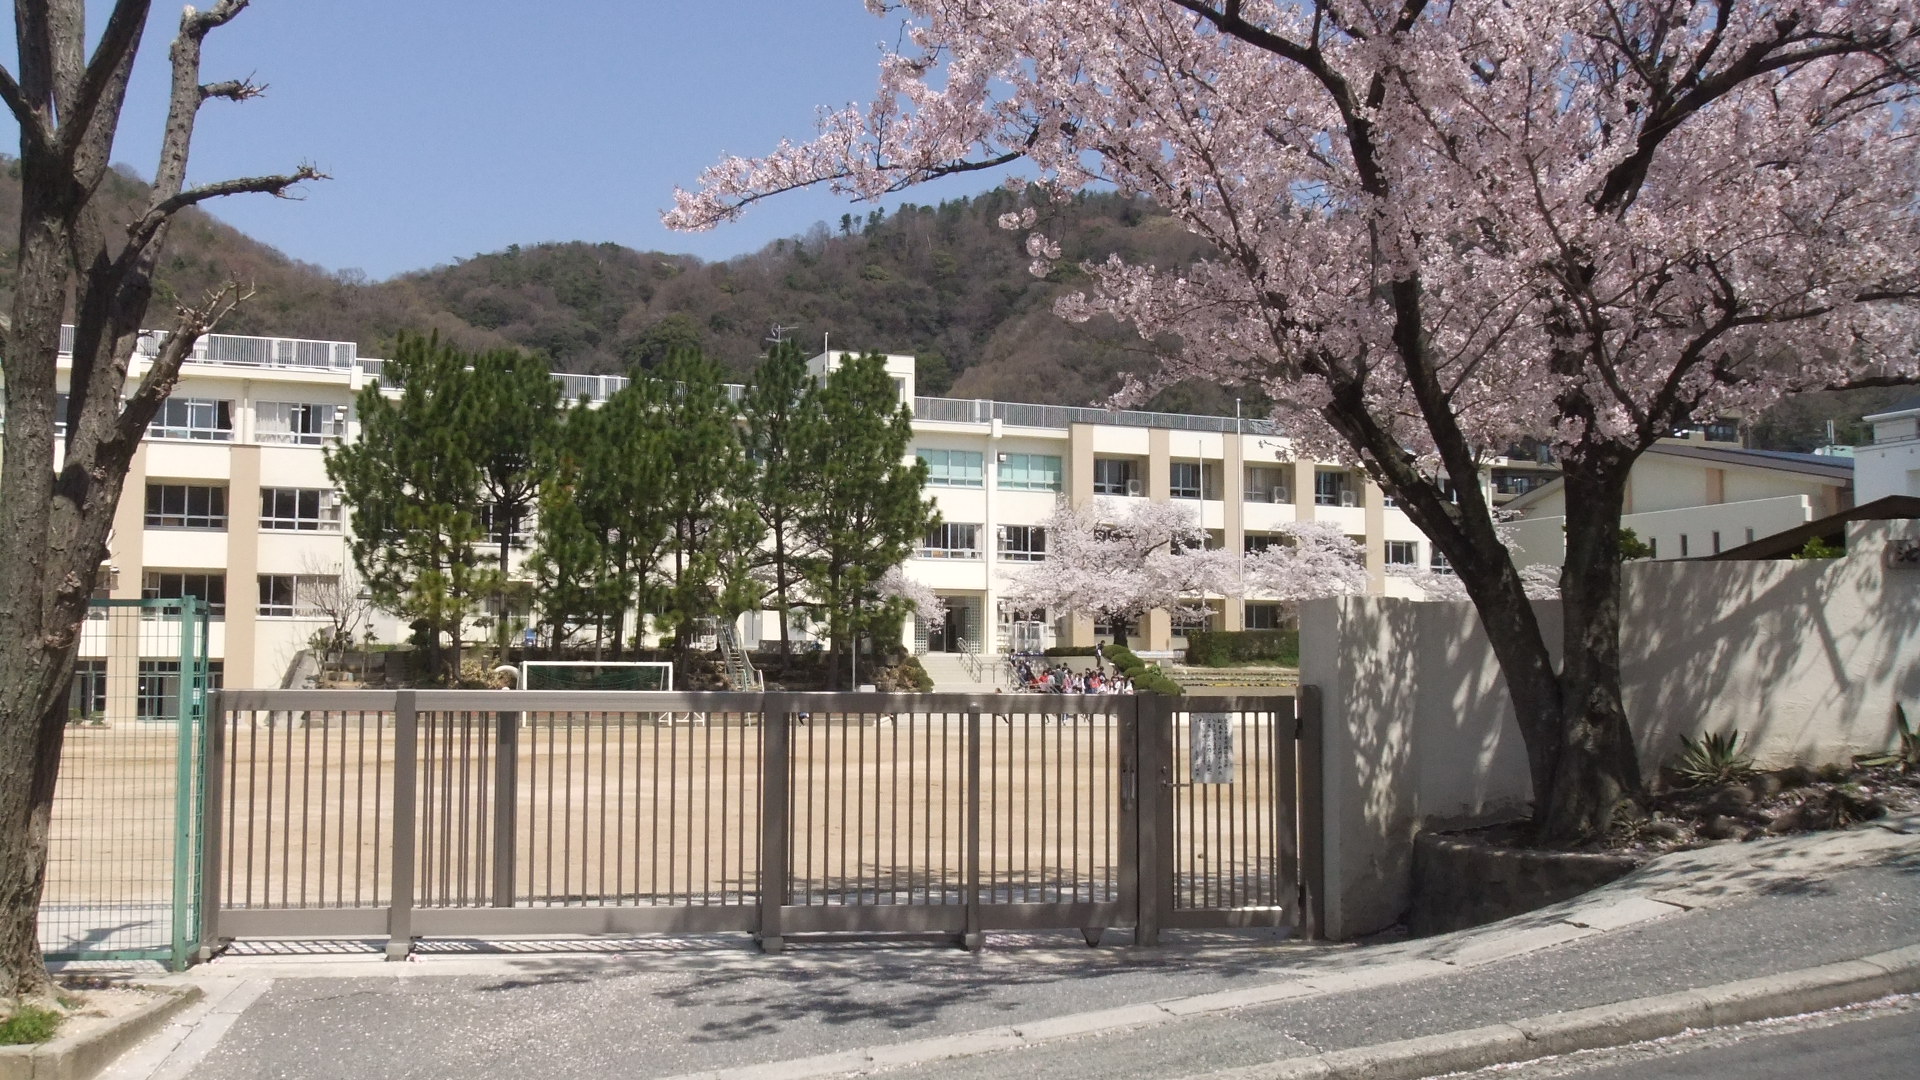 Primary school. Satsukigaoka up to elementary school (elementary school) 363m